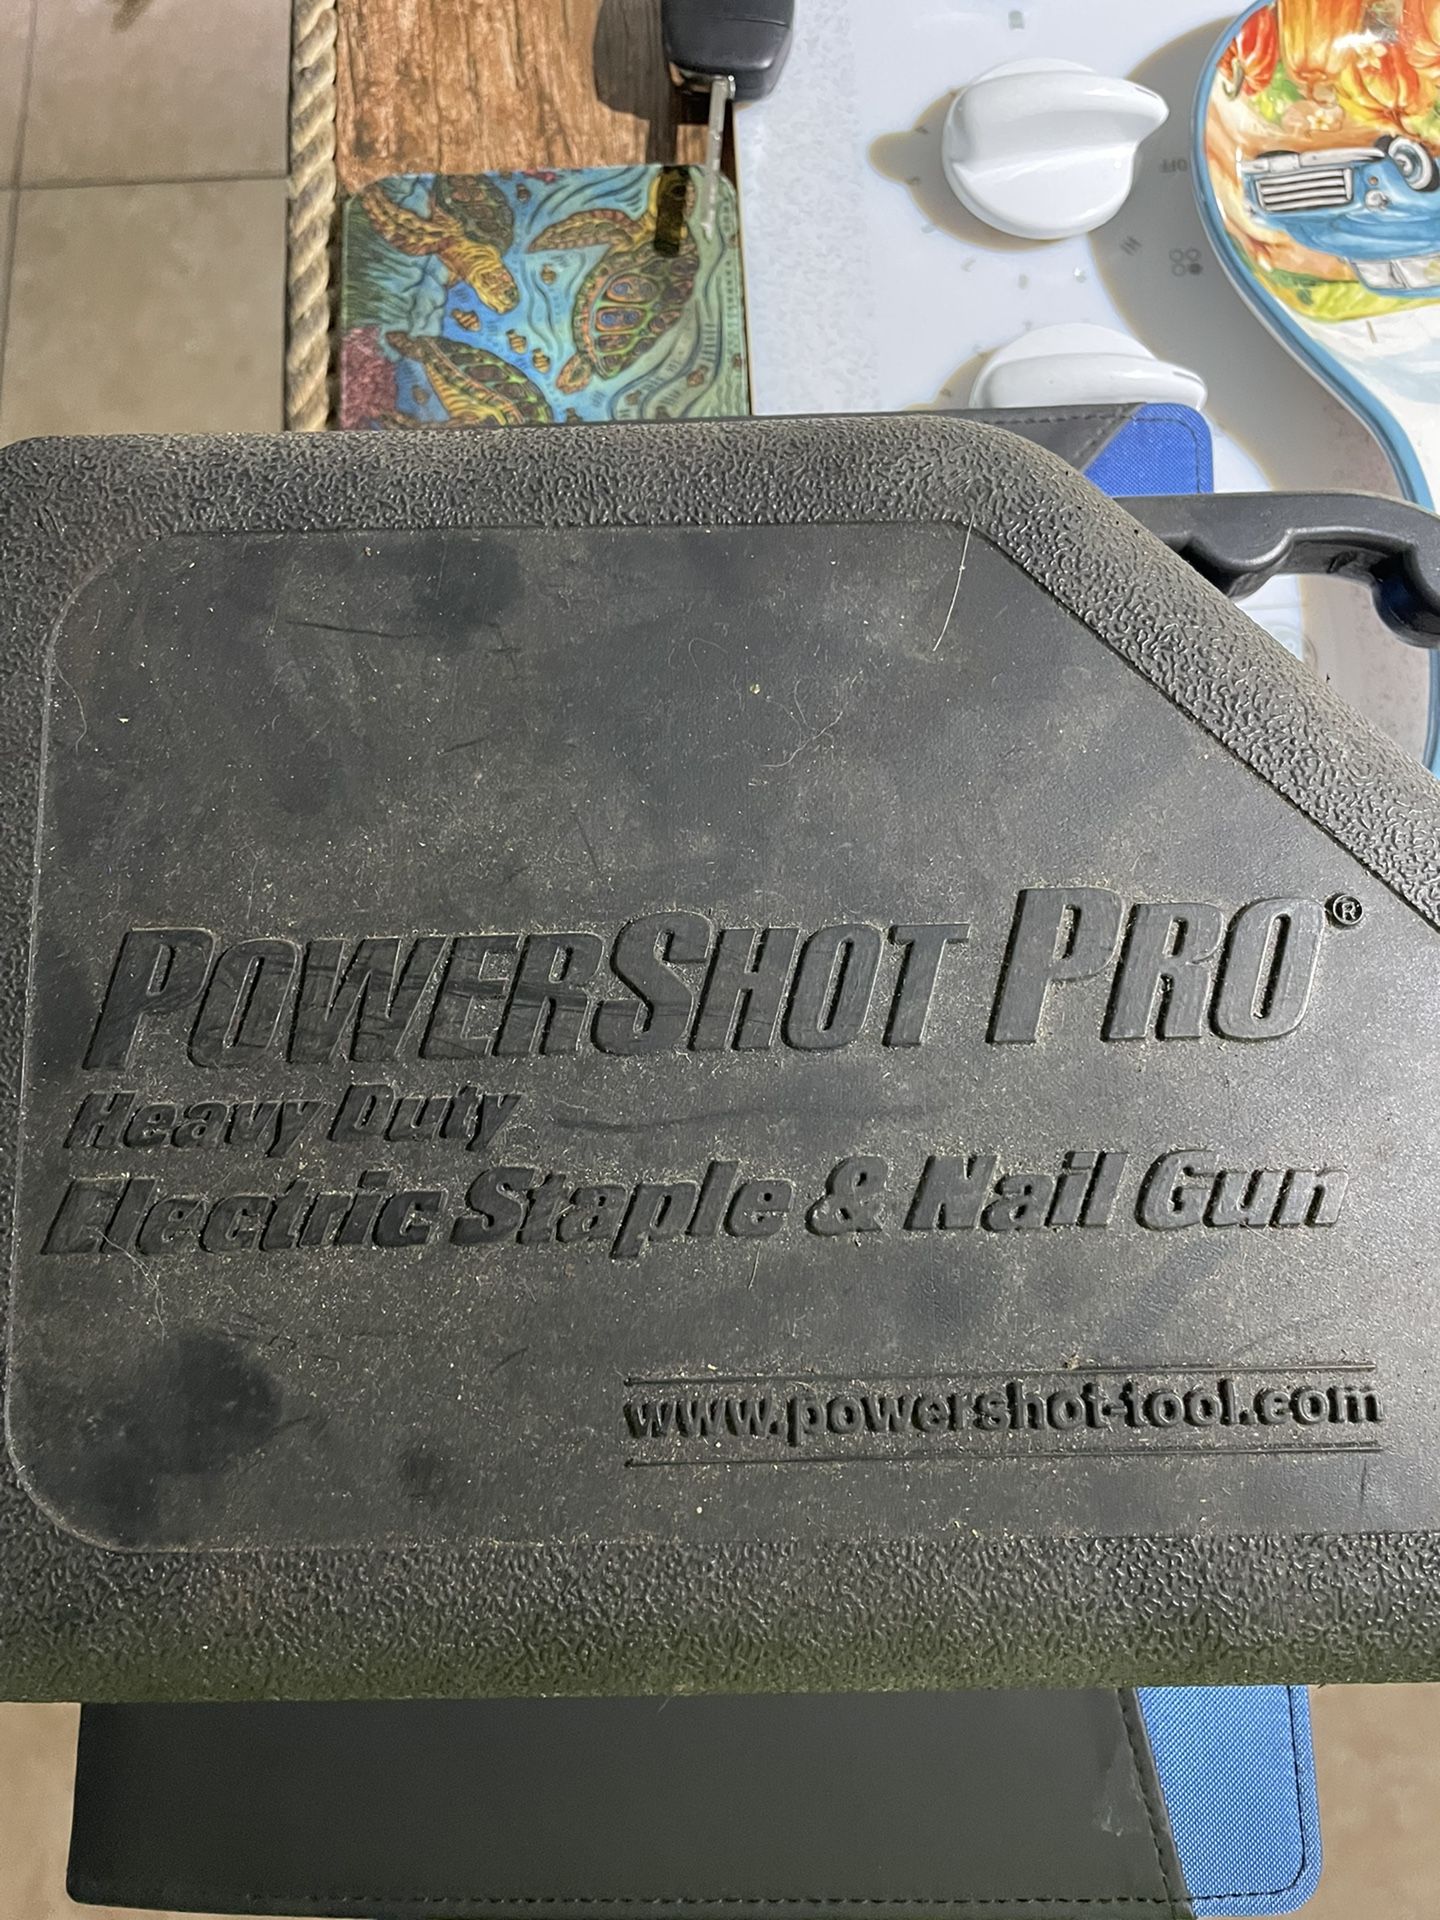 Power shot Pro Electric Staple Gun 